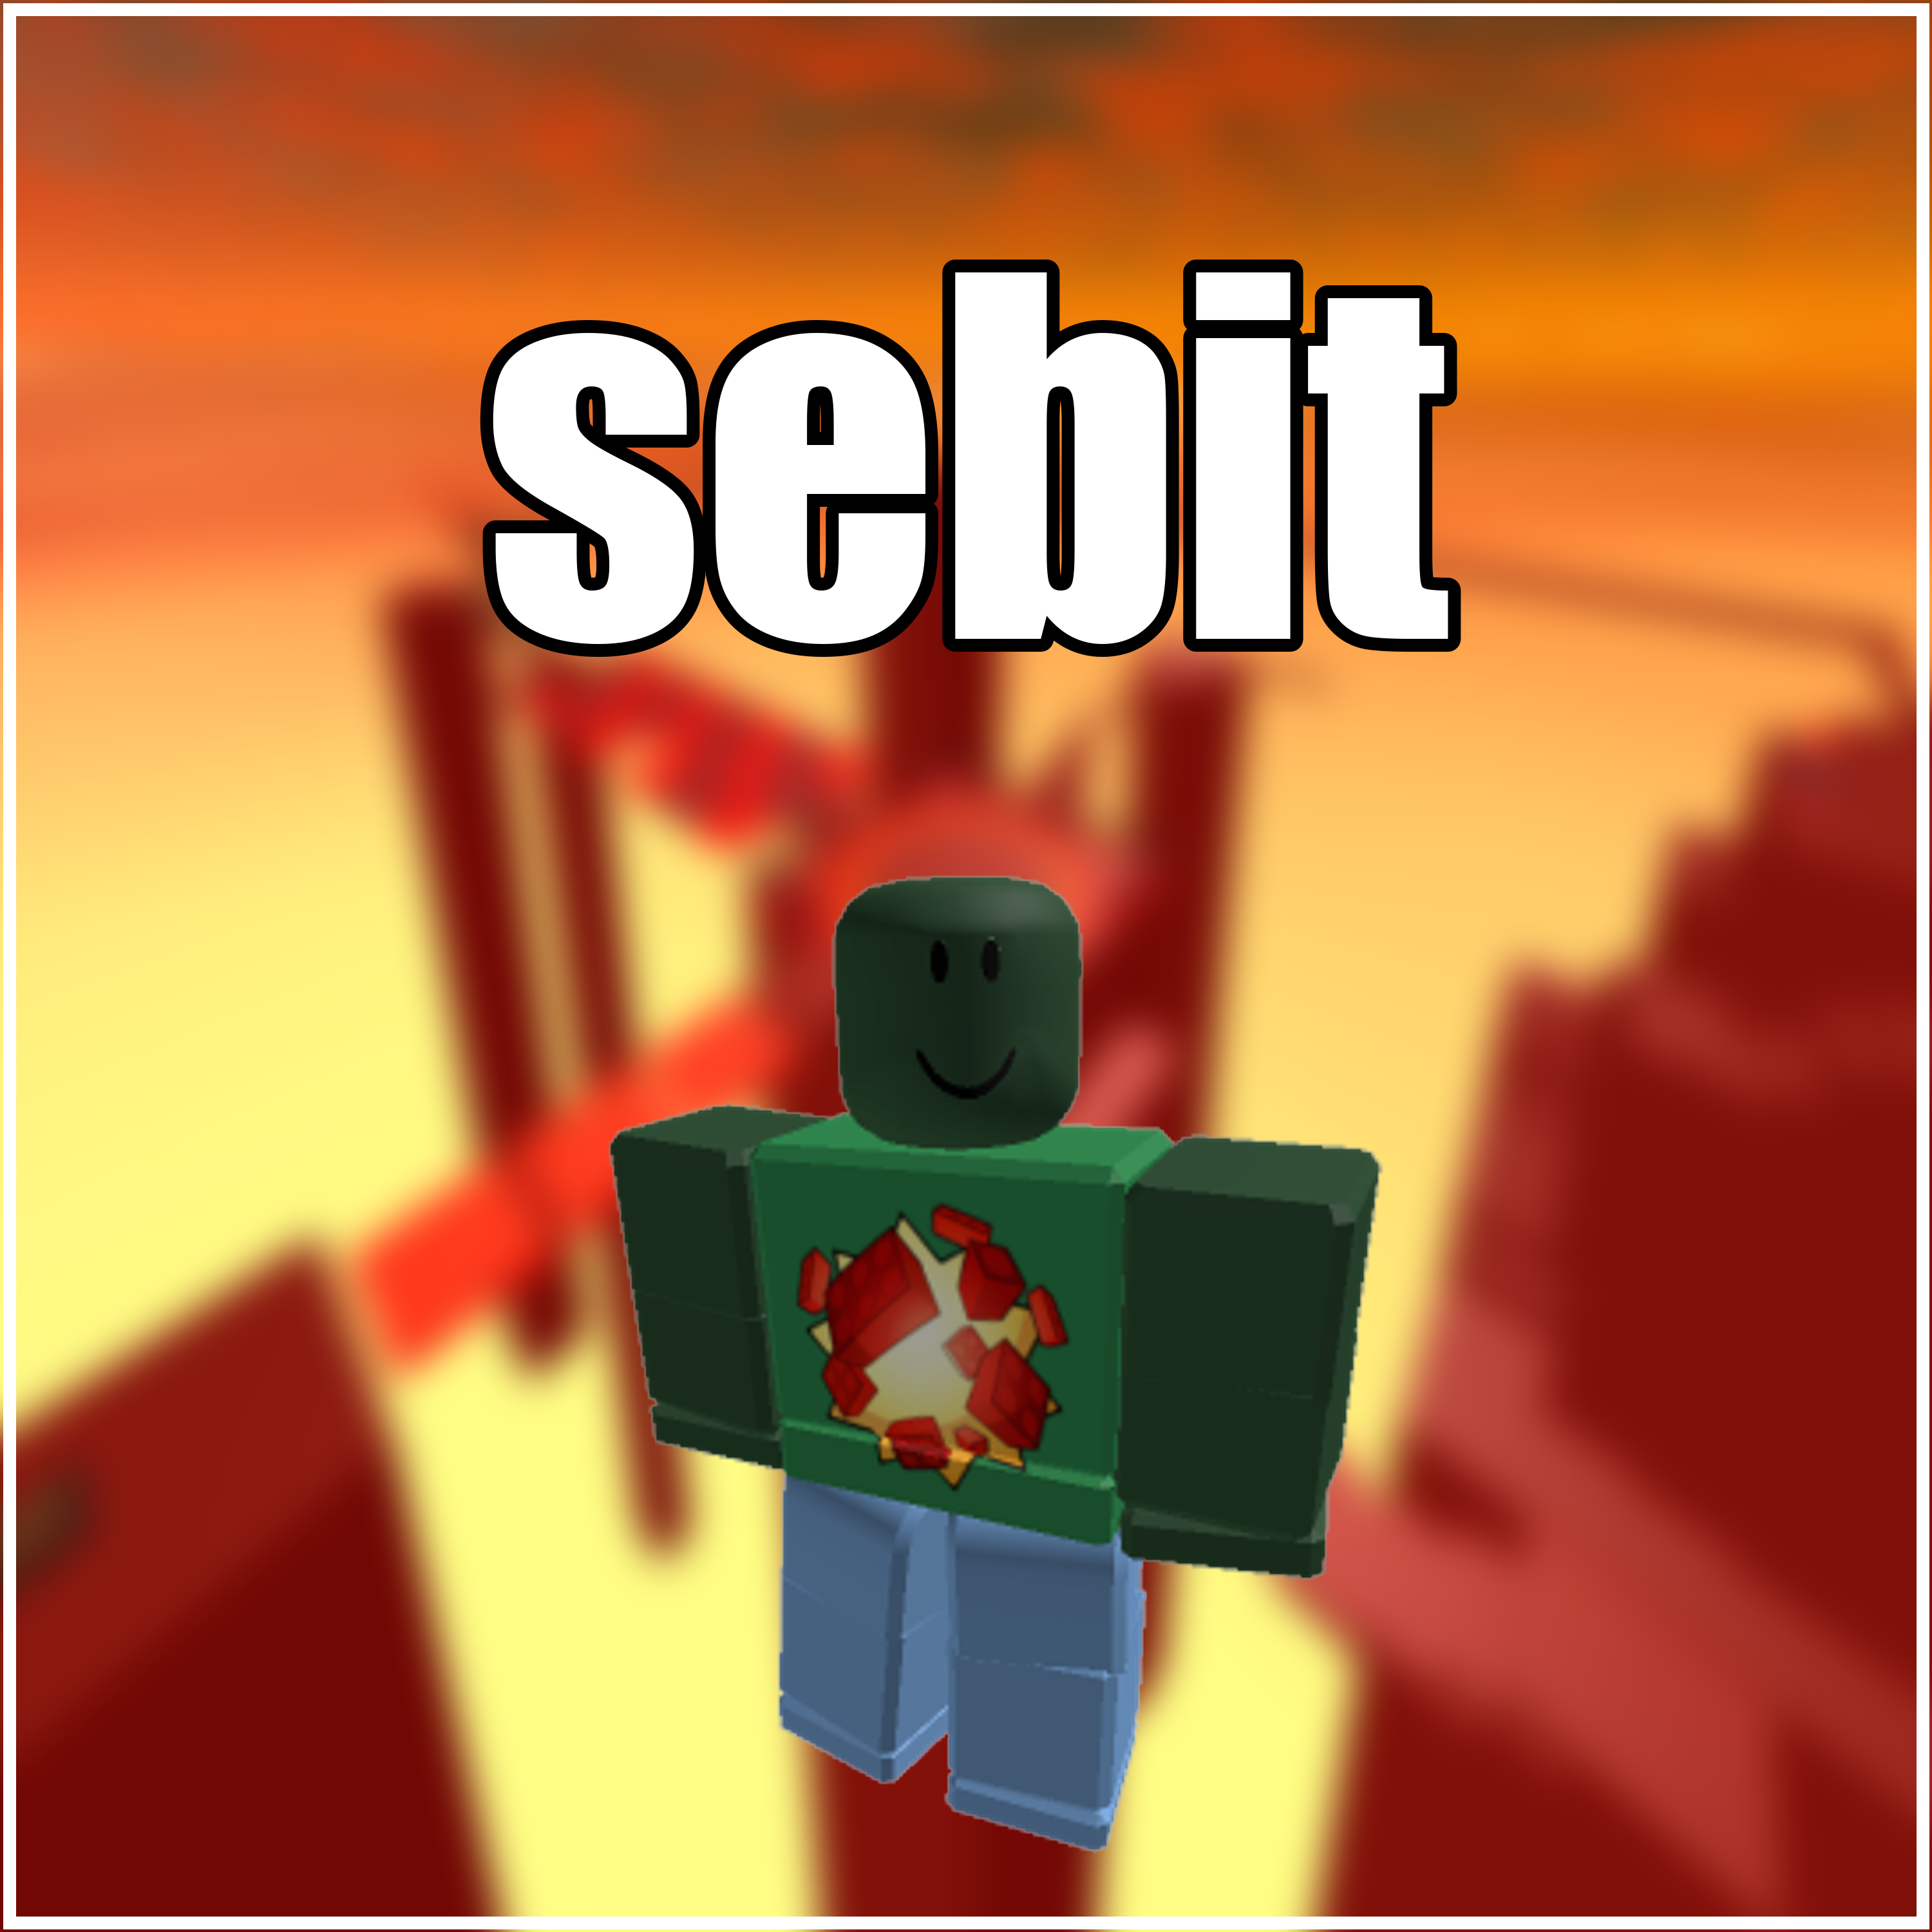 robruh RARE username "sebit" ROBLOX account guaranteed to be unverified!